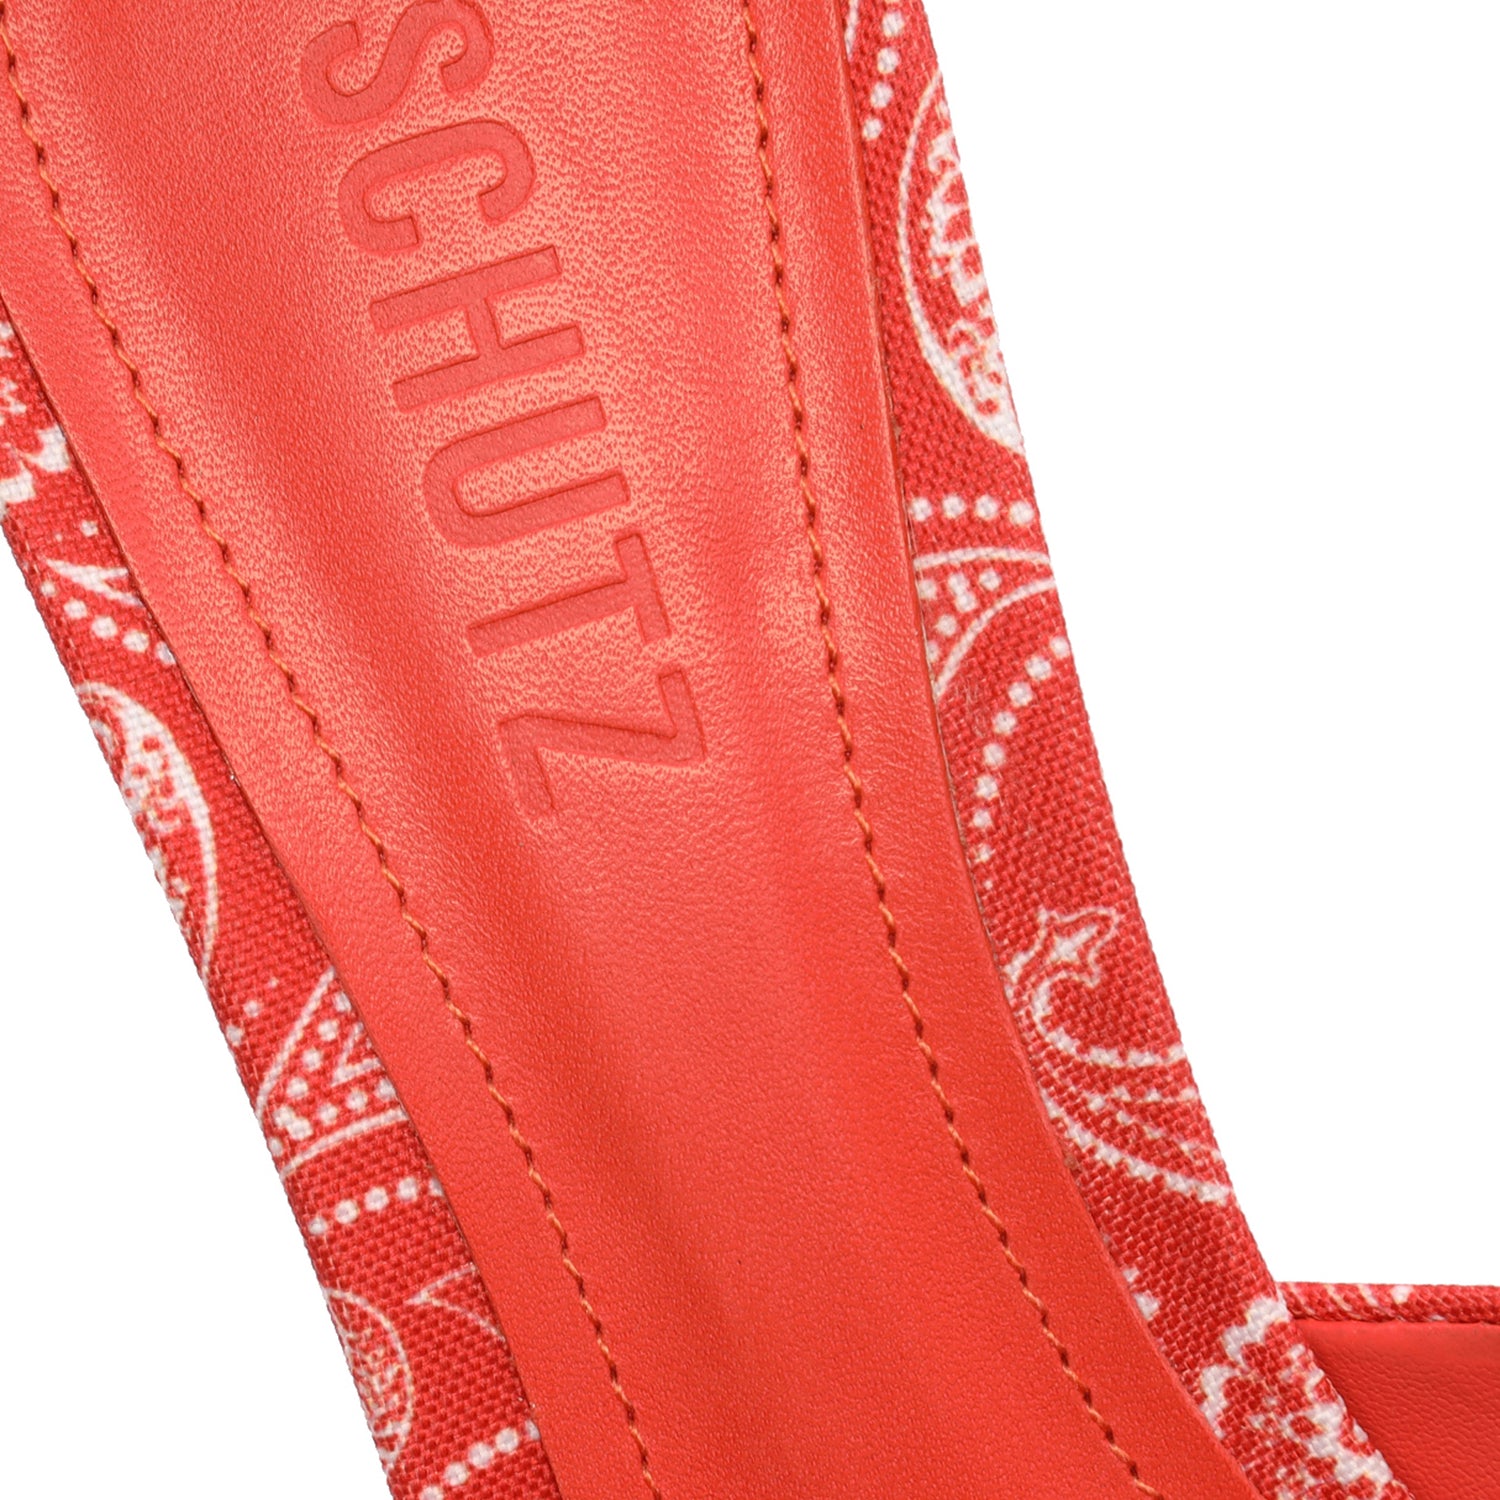 Dethalia Beads & Fabric Sandal Sandals OLD    - Schutz Shoes